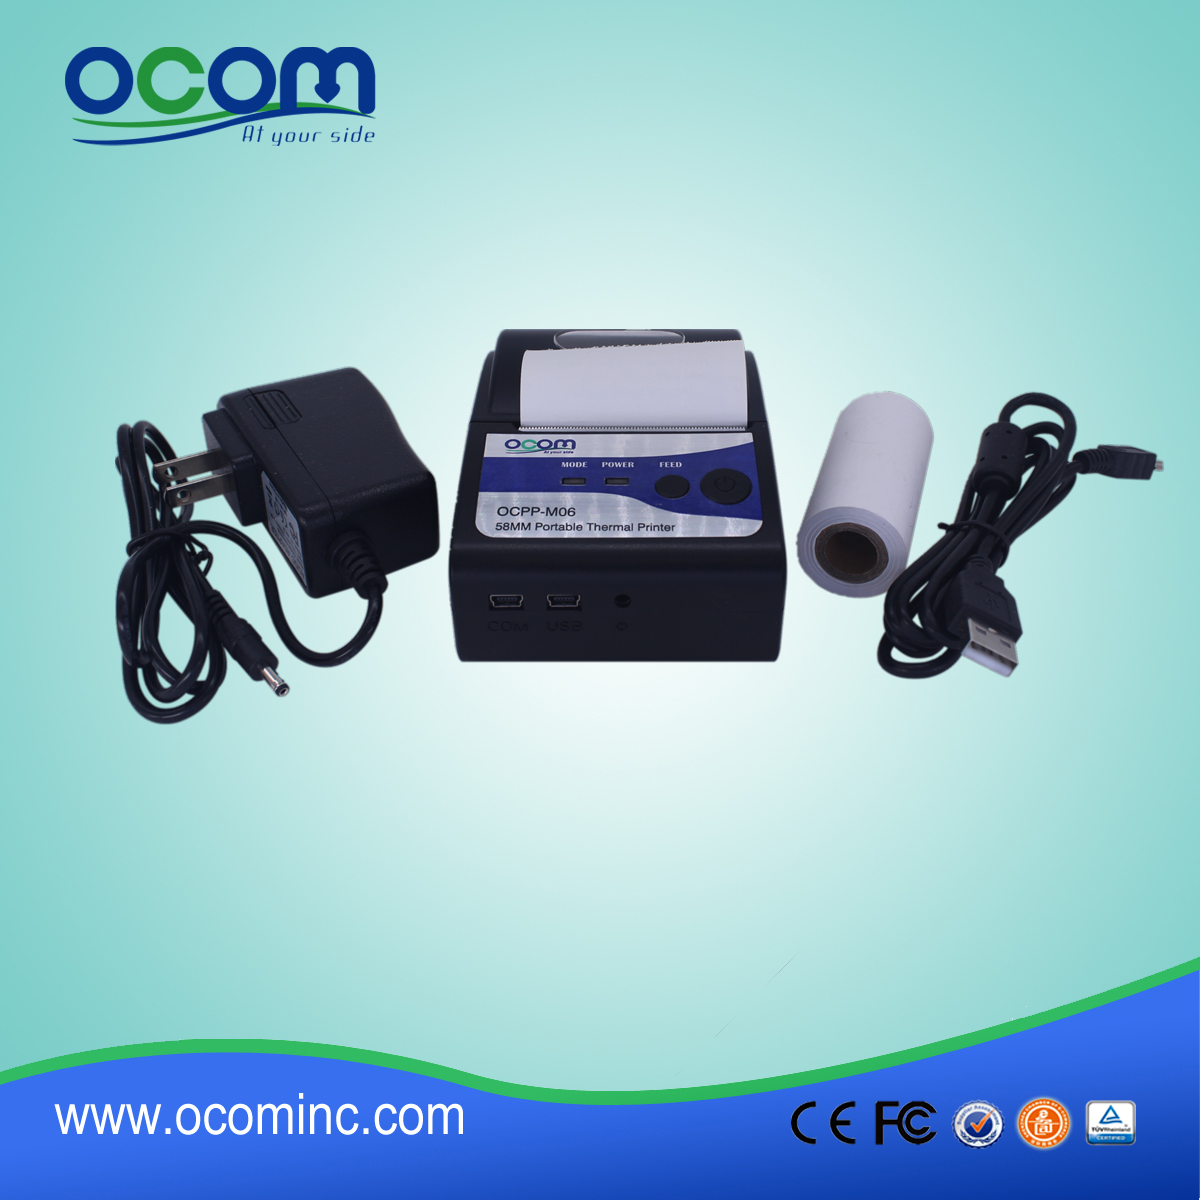 (OCPP-M06) OCOM Hot verkopen goedkope android pos-printer, pos-printer android